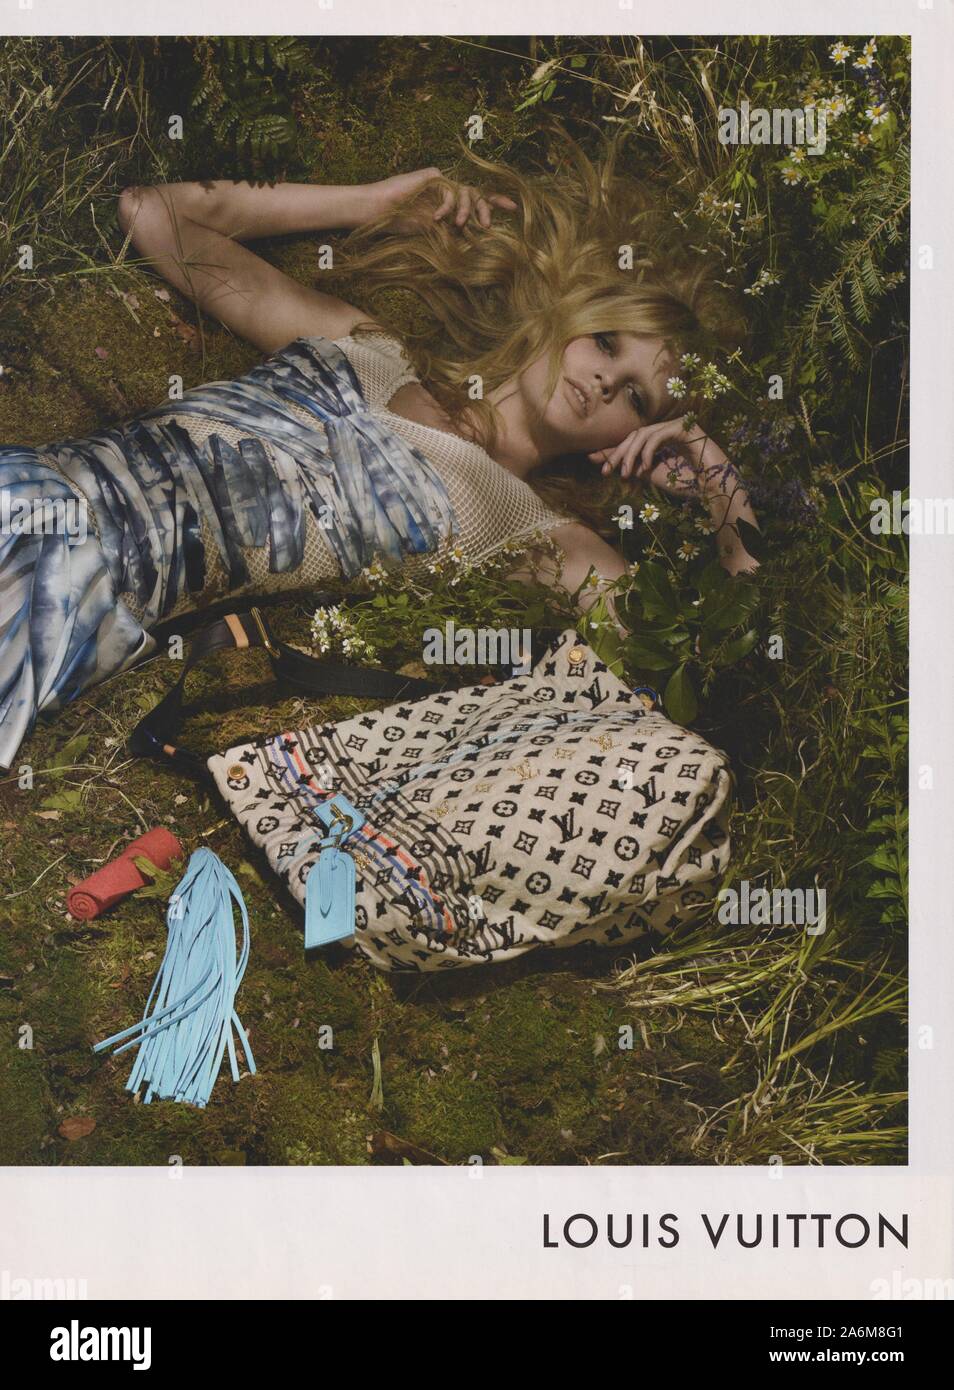 poster advertising Louis Vuitton handbag with Lara Stone in paper